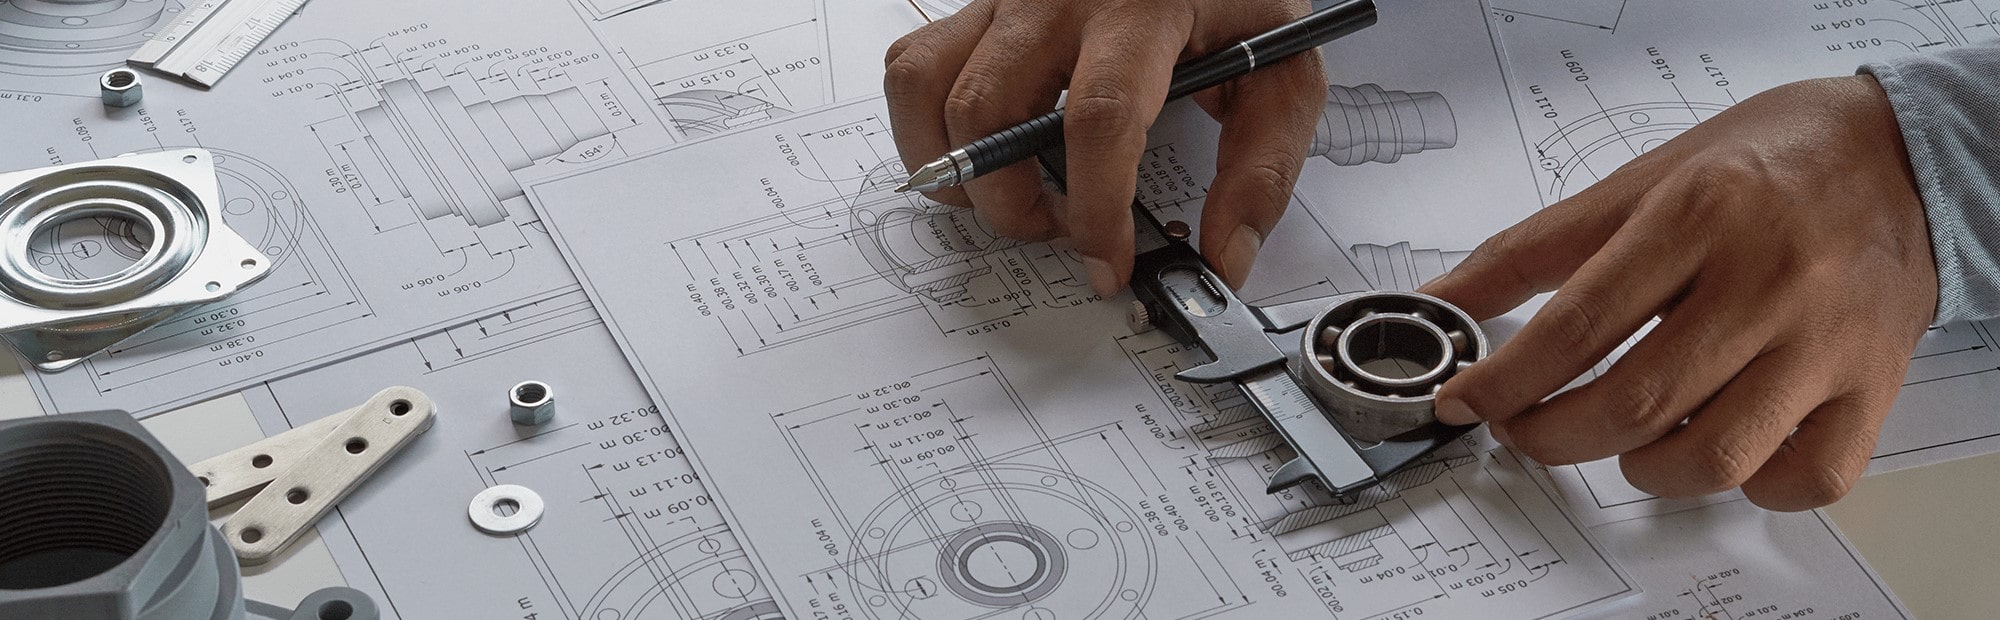 Man's hand looking over design plans